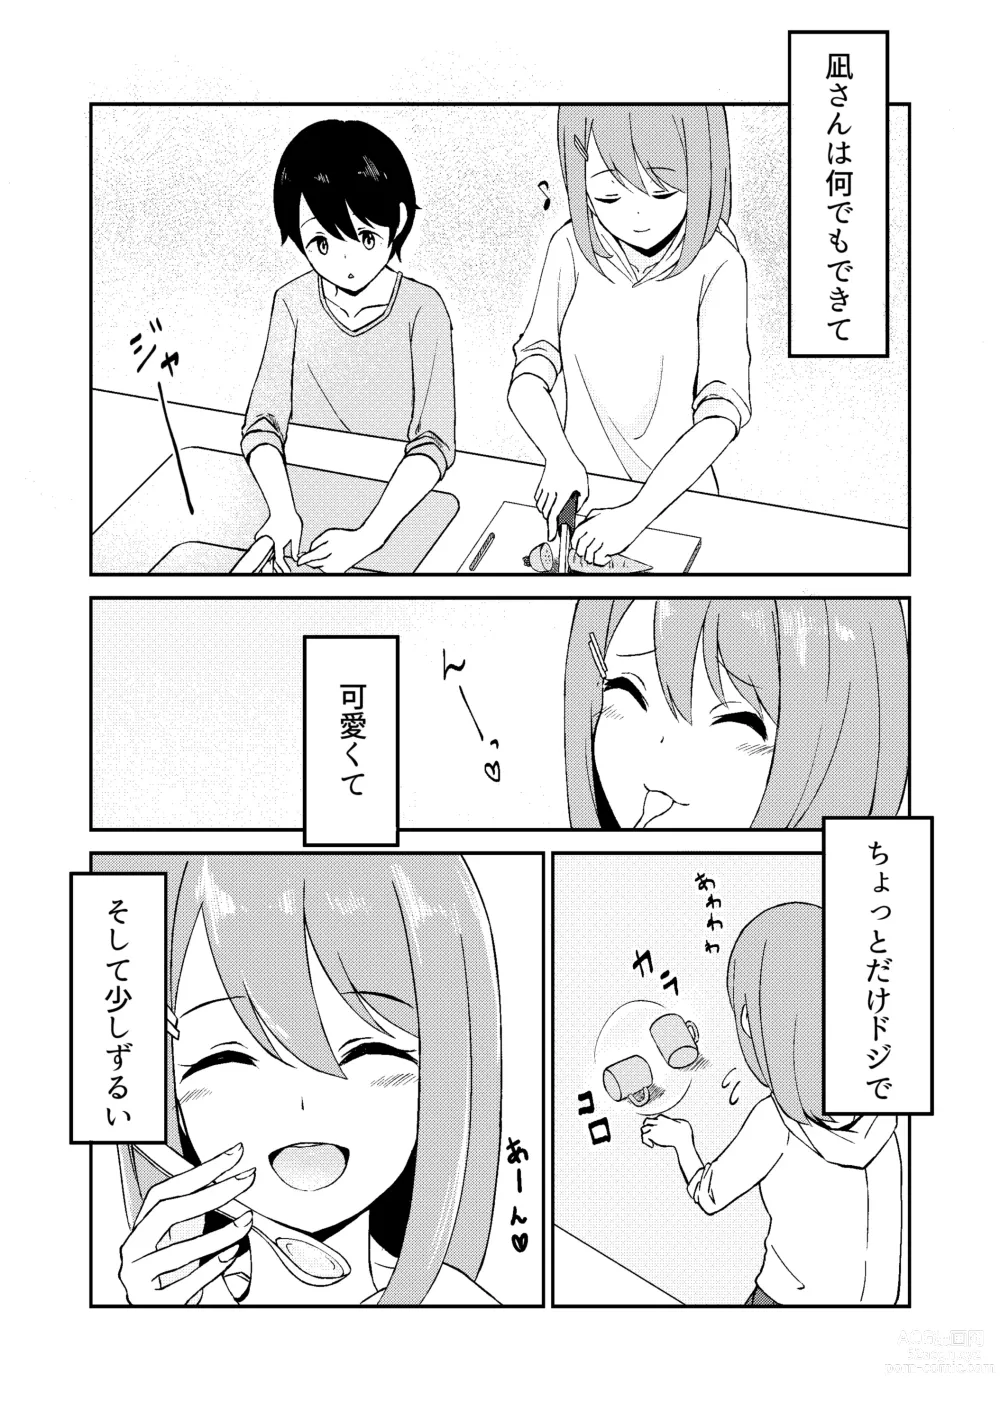 Page 4 of doujinshi Kimi ga Mienakutatte